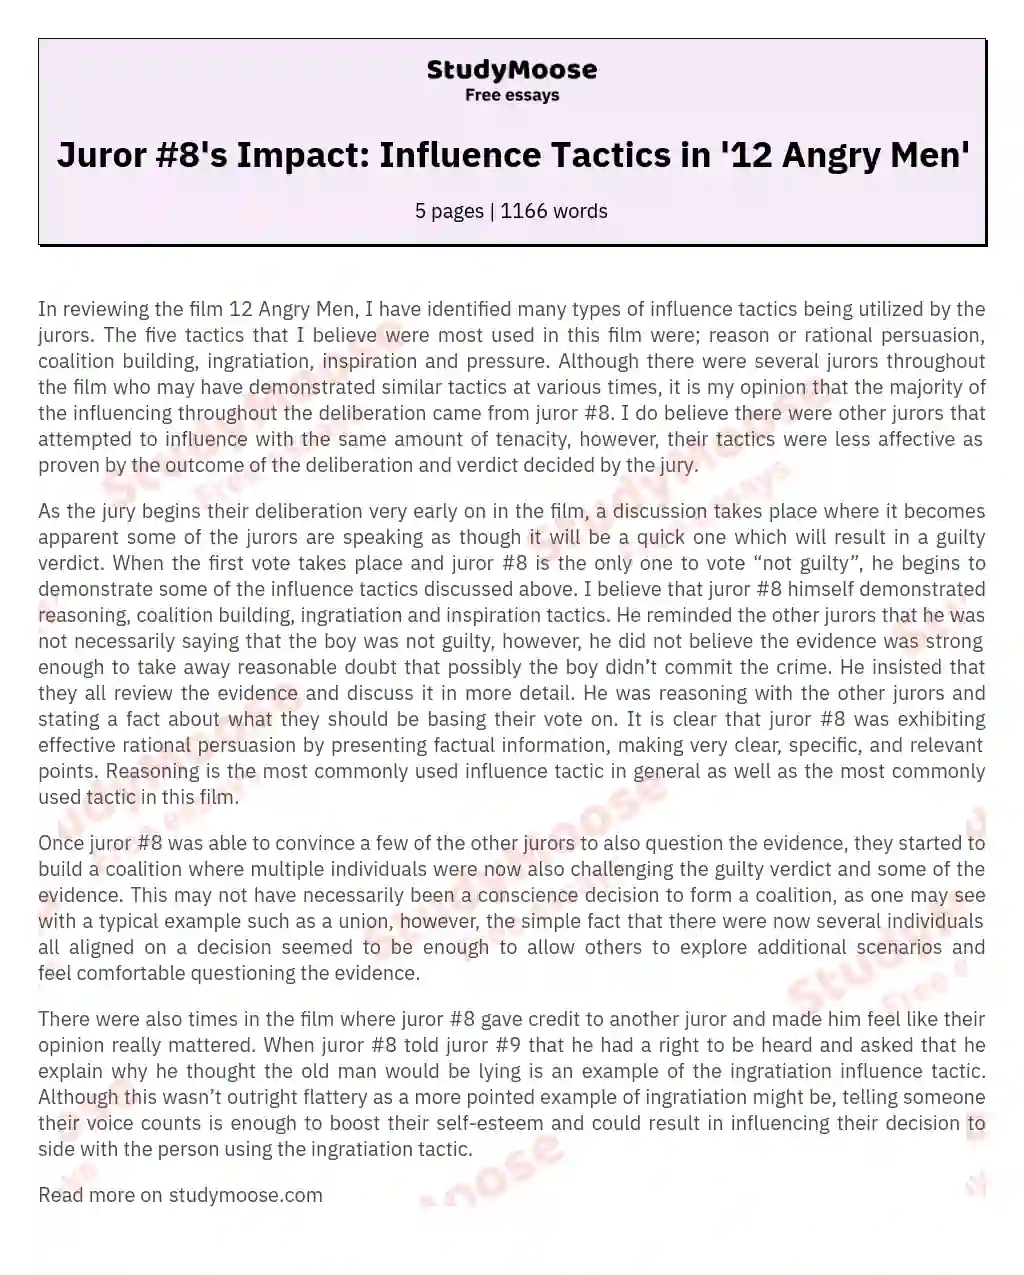 Juror #8's Impact: Influence Tactics in '12 Angry Men' essay